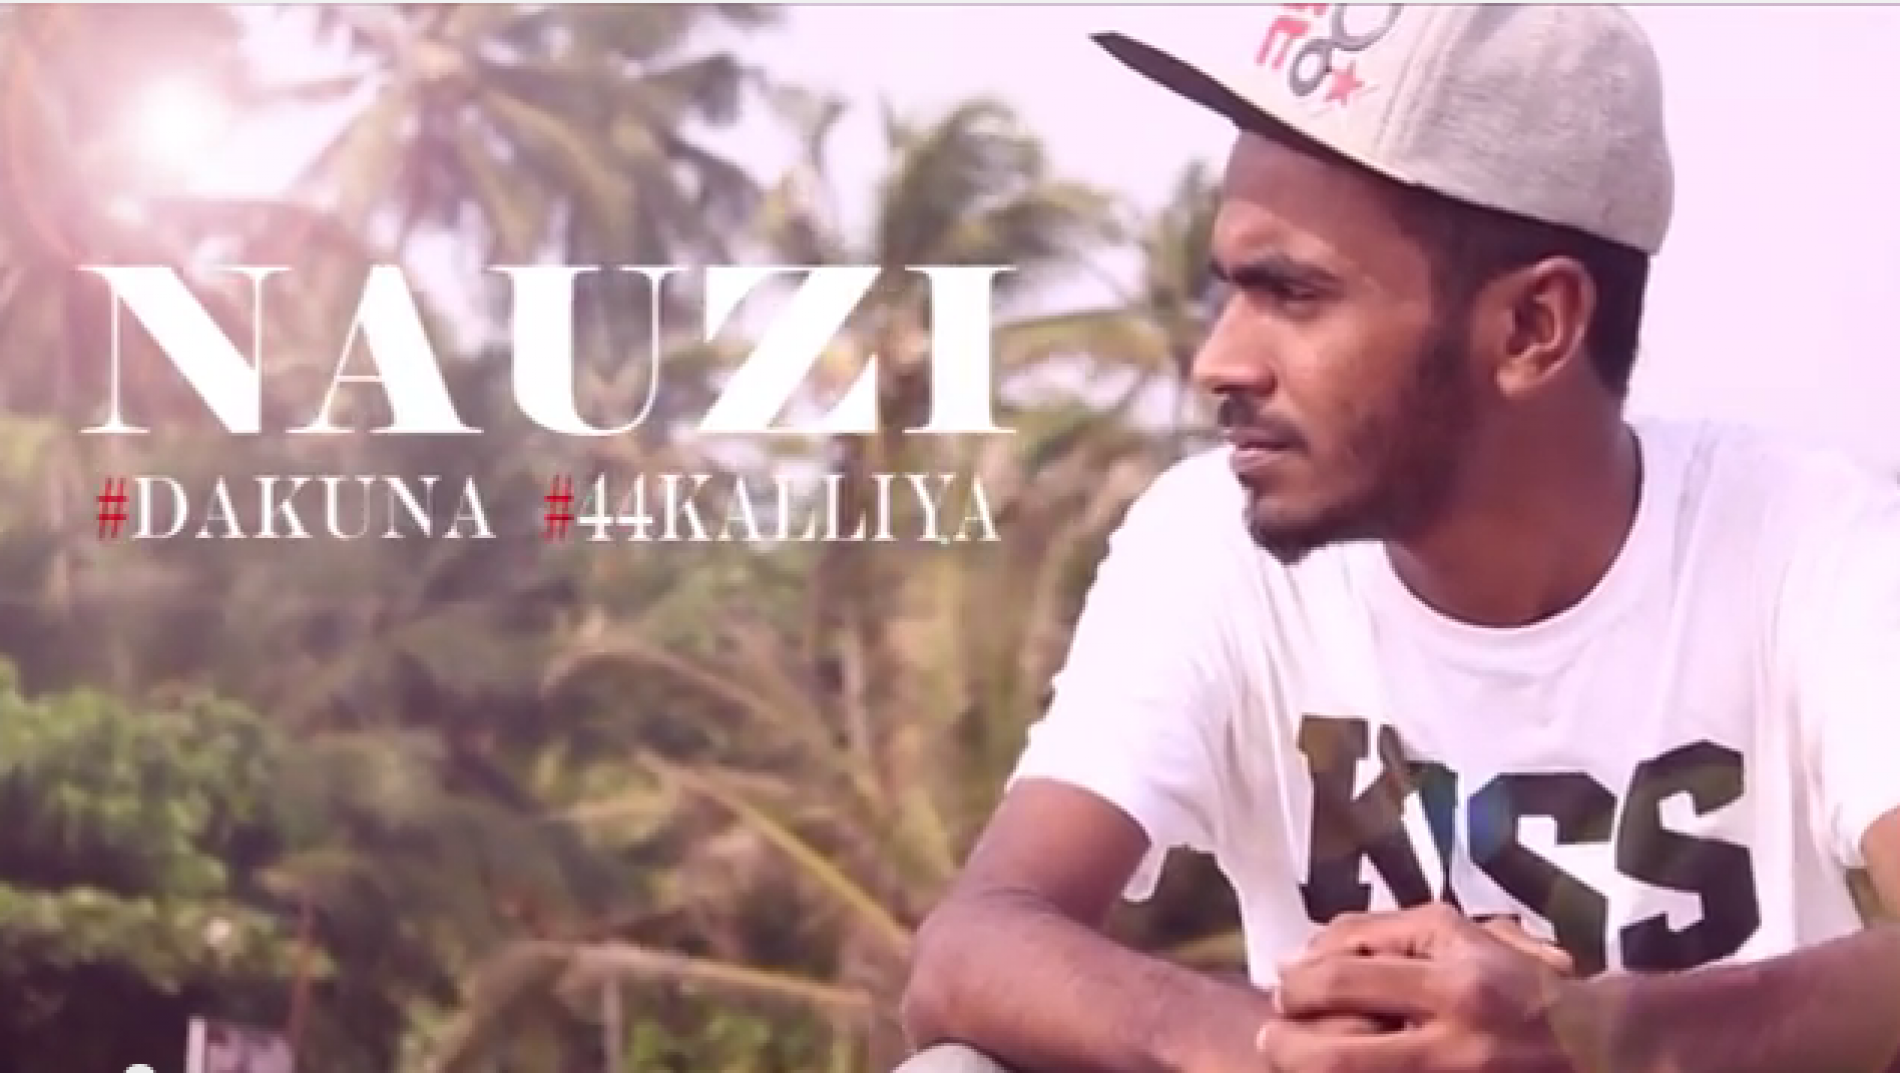 Nauzi (Dakuna – 44 Kalliya) Mixtape: Poliya